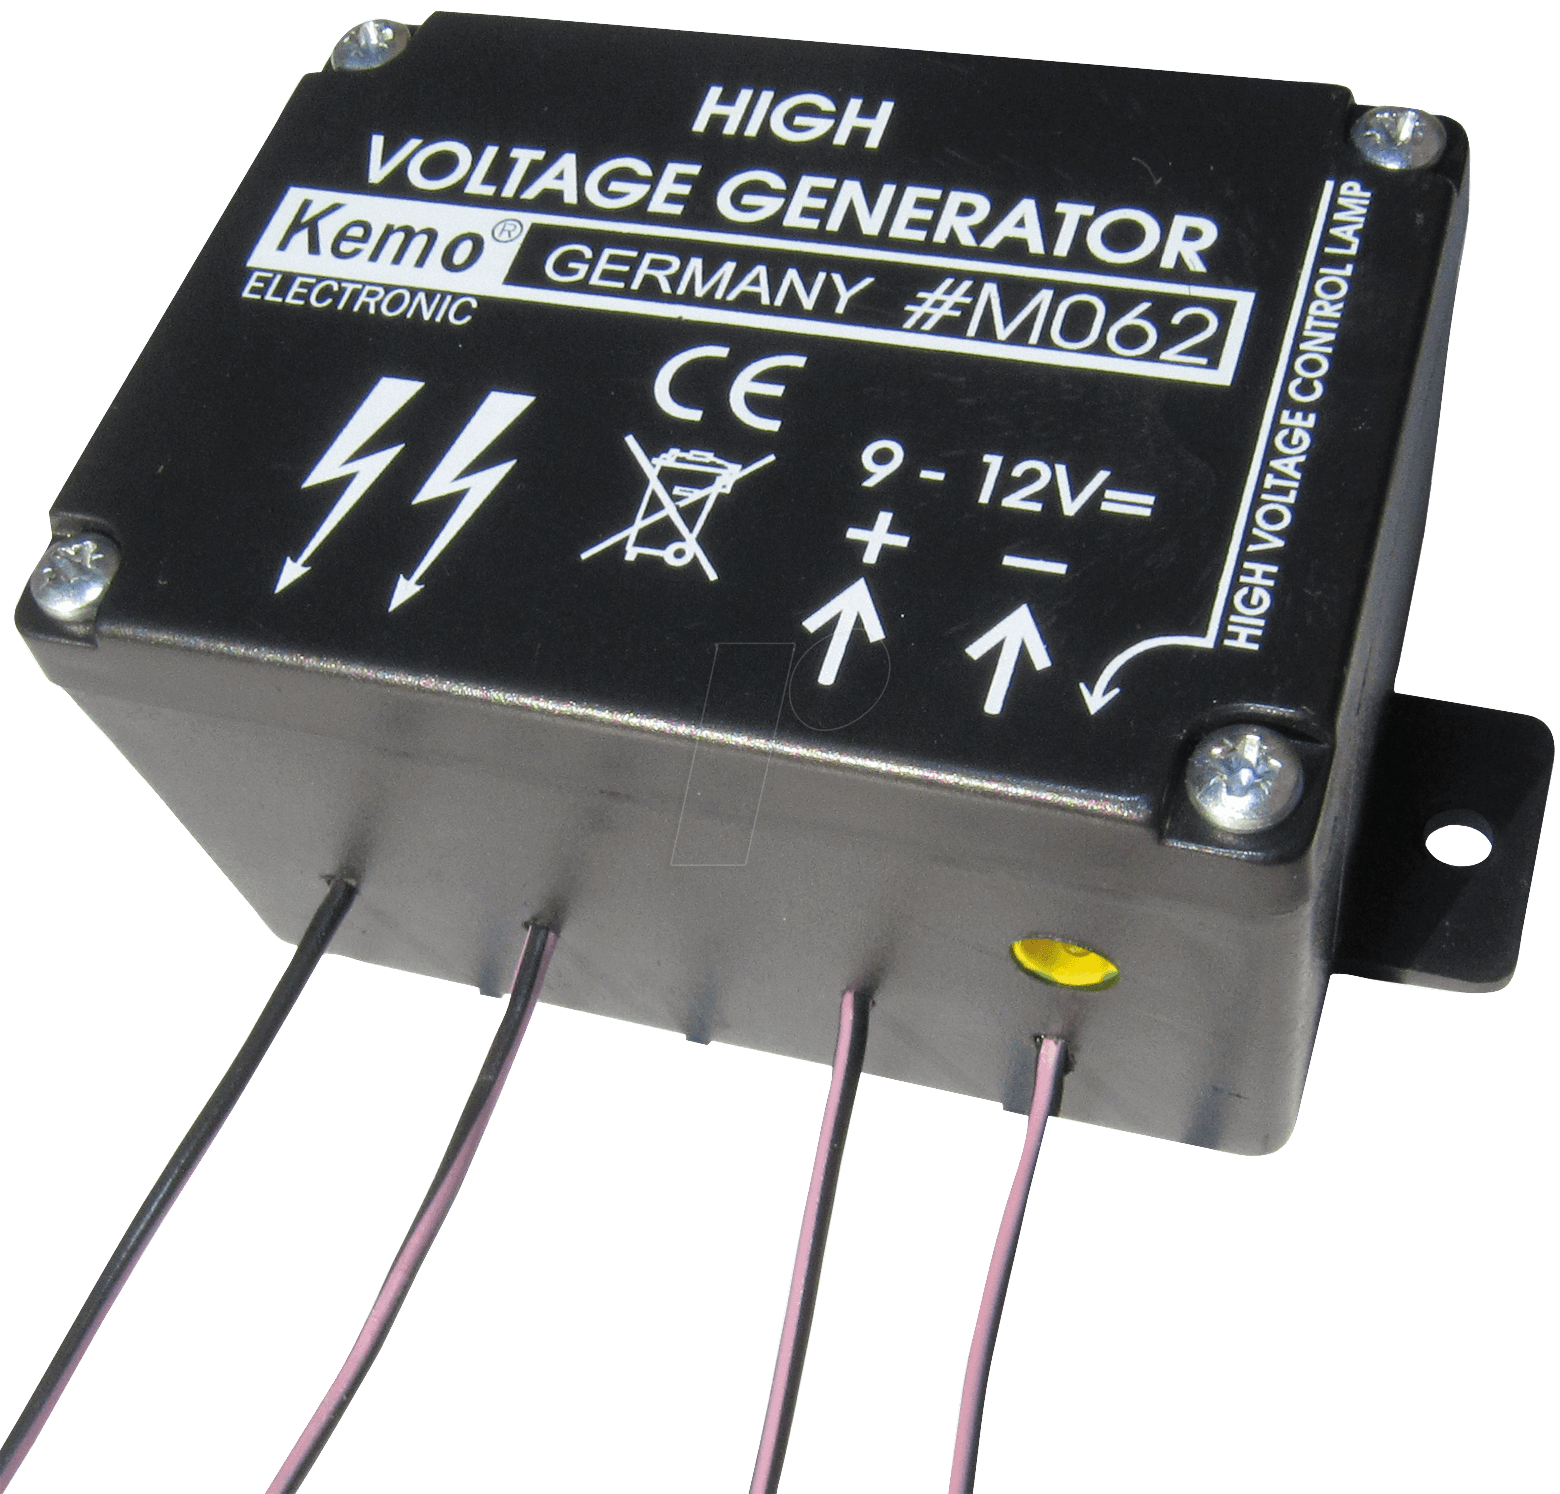 Electrical wake up mild M 062: Mini fence high voltage generator at reichelt elektronik